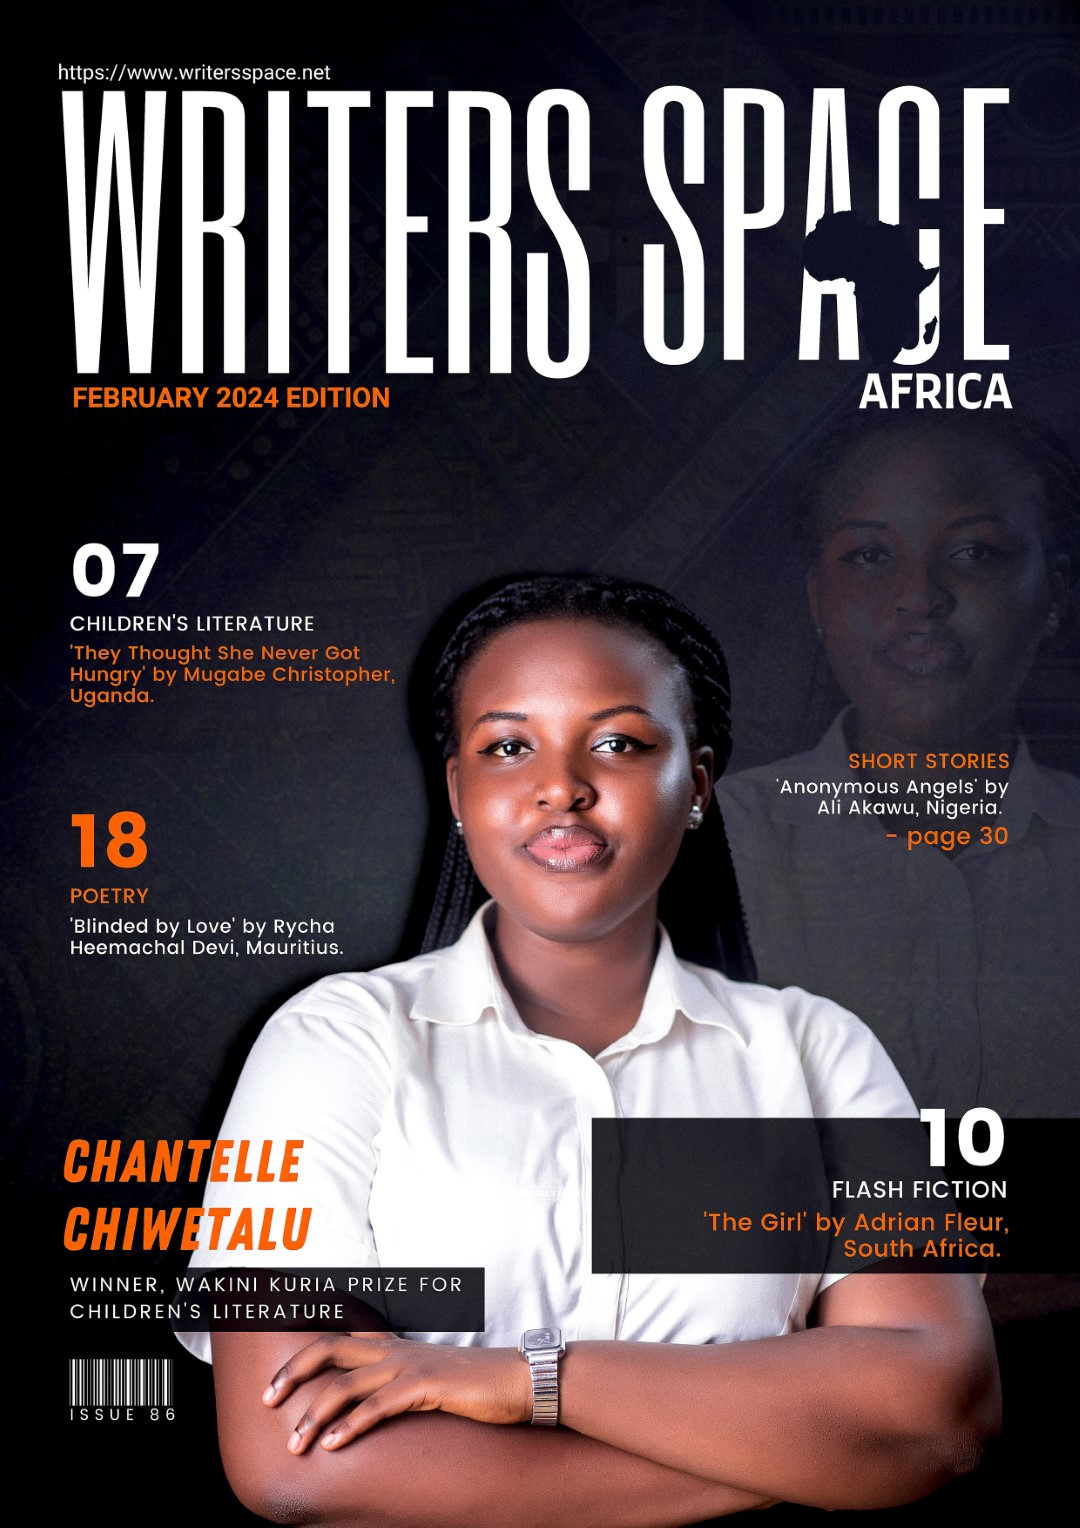 WSA Literary Magazine - February 2024 Edition COVER